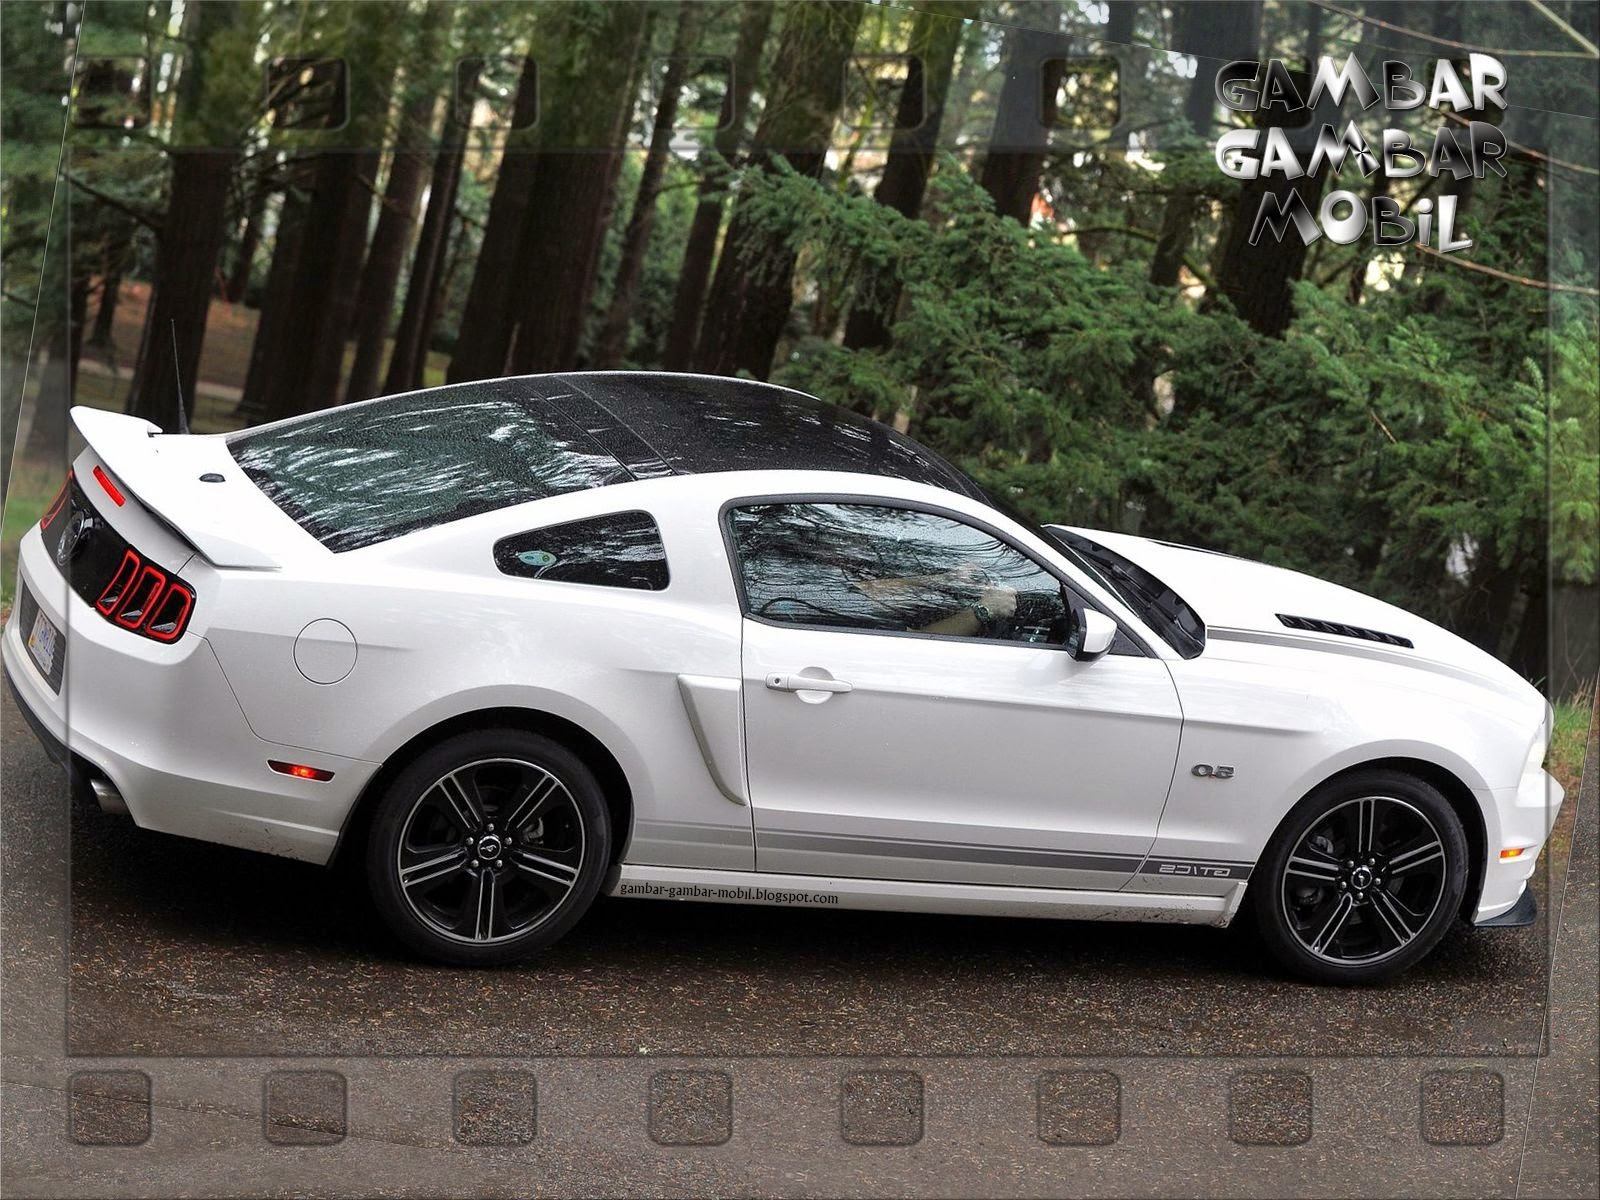 Gambar Ford Mustang Gt - Car Autos Gallery